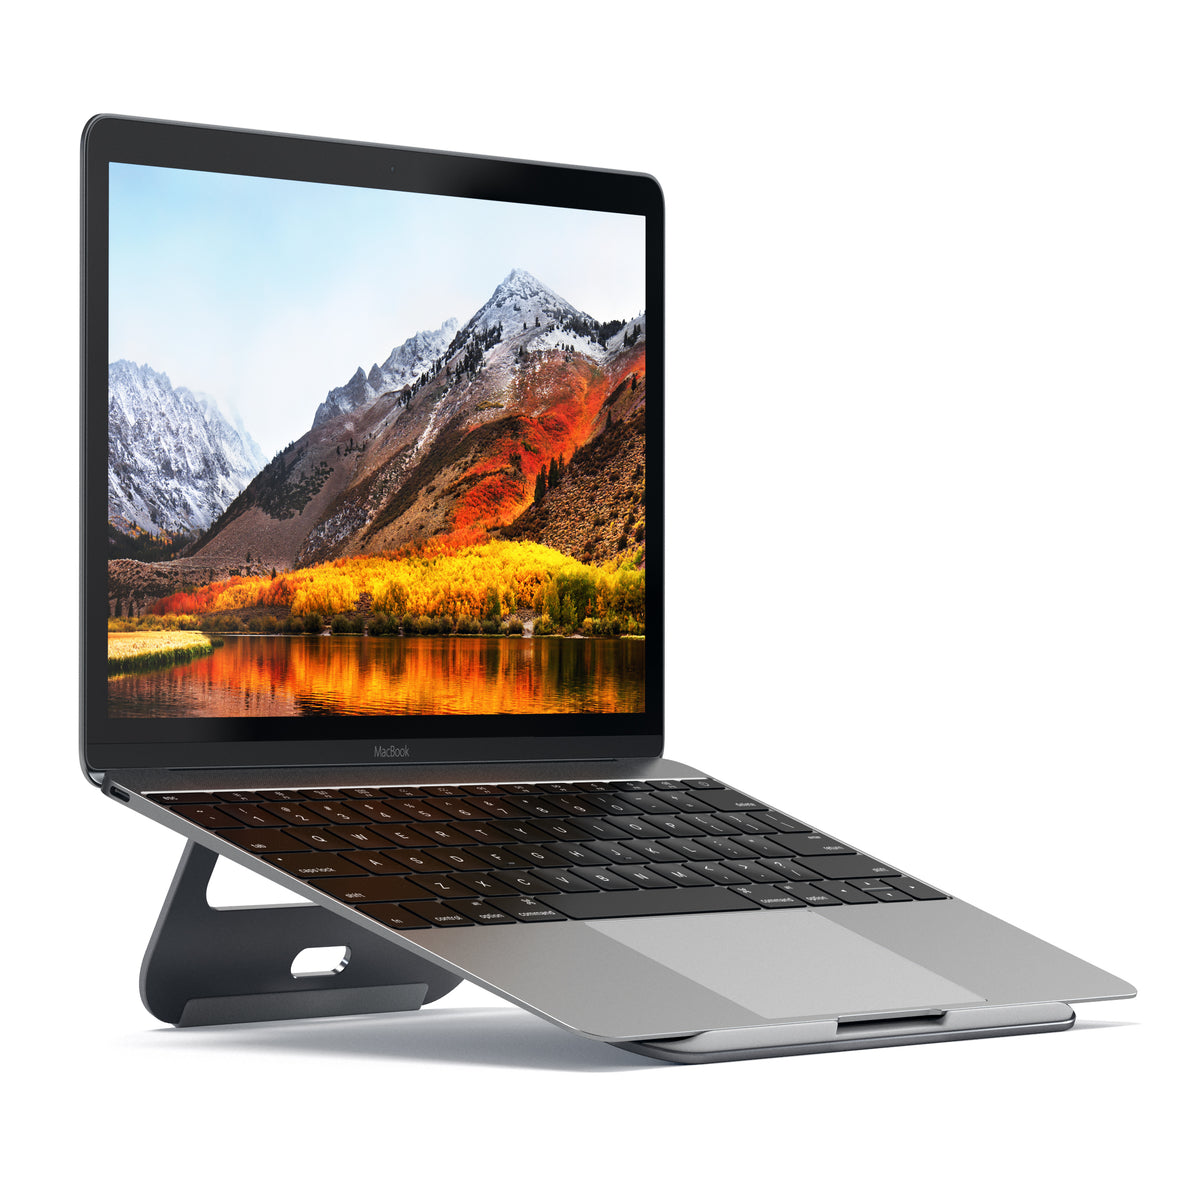 SATECHI Aluminum Laptop Stand - Space Grey